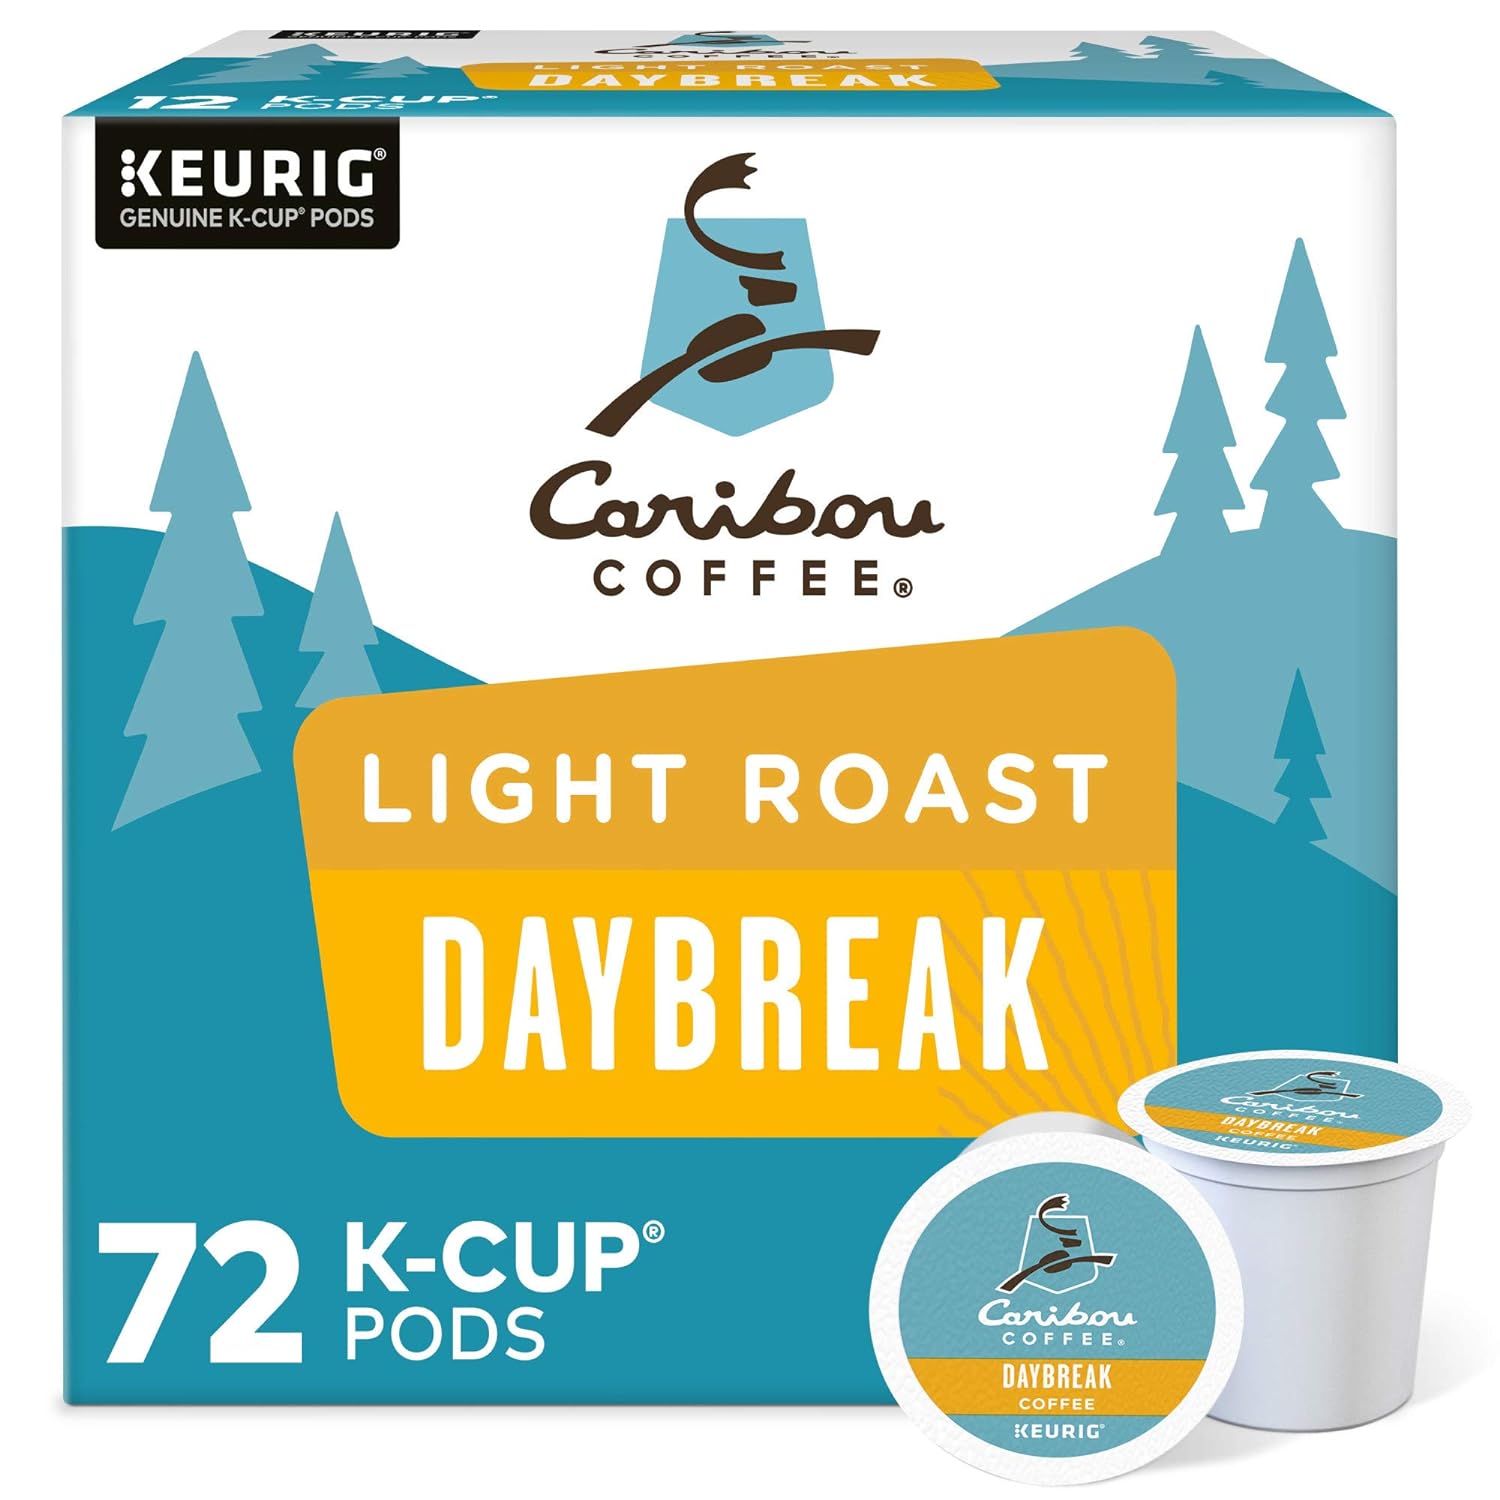 Caribou Coffee Daybreak Morning Blend Keurig Single-Serve K-Cup Pod, Light Roast Coffee, 72 Count (6 Packs of 12)